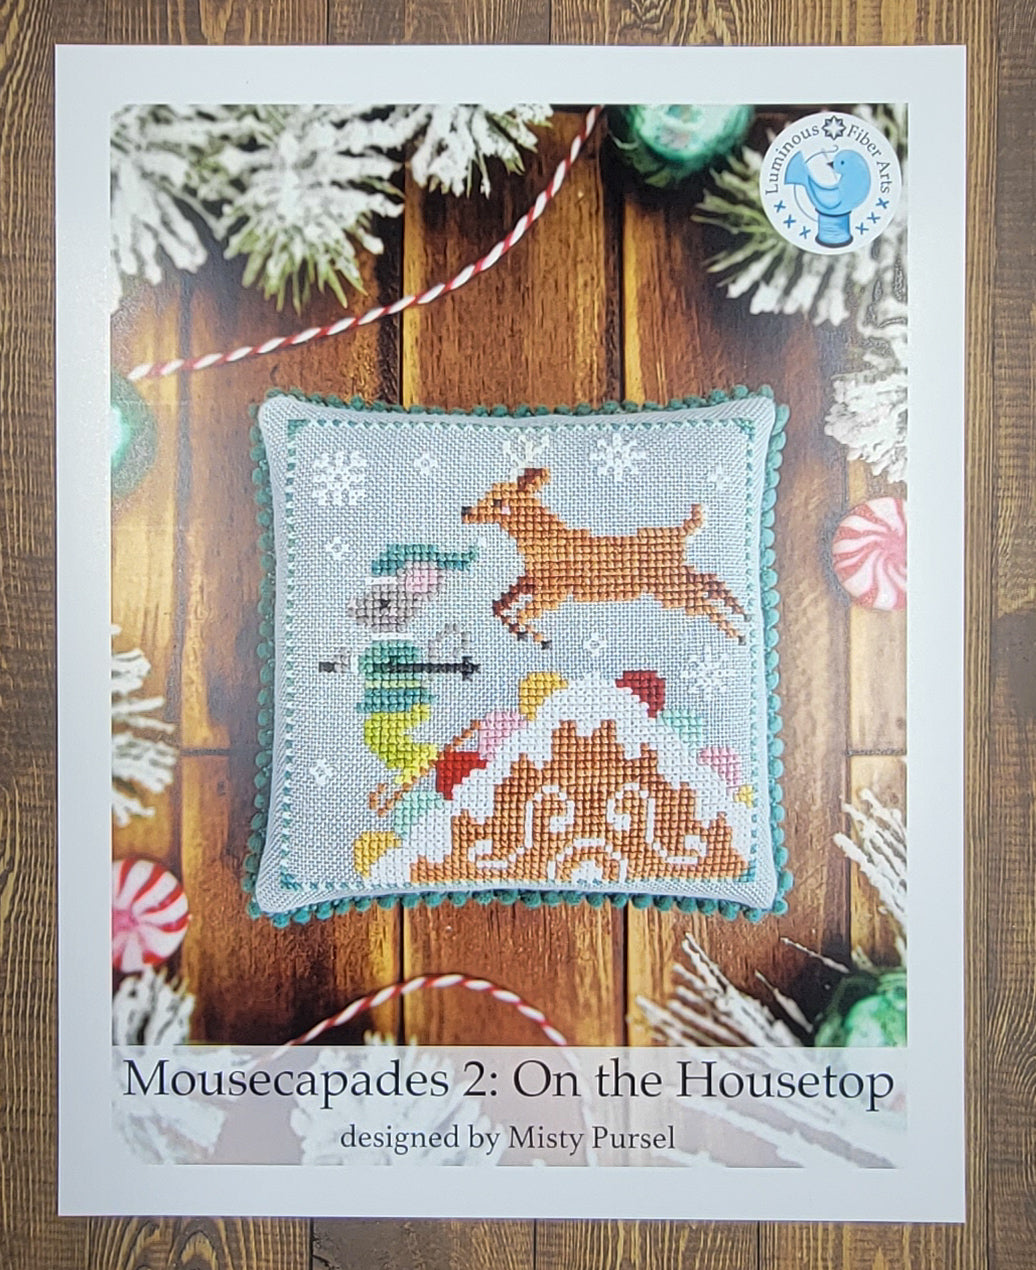 Mousecapades 2: On the Housetop by Luminous Fiber Arts